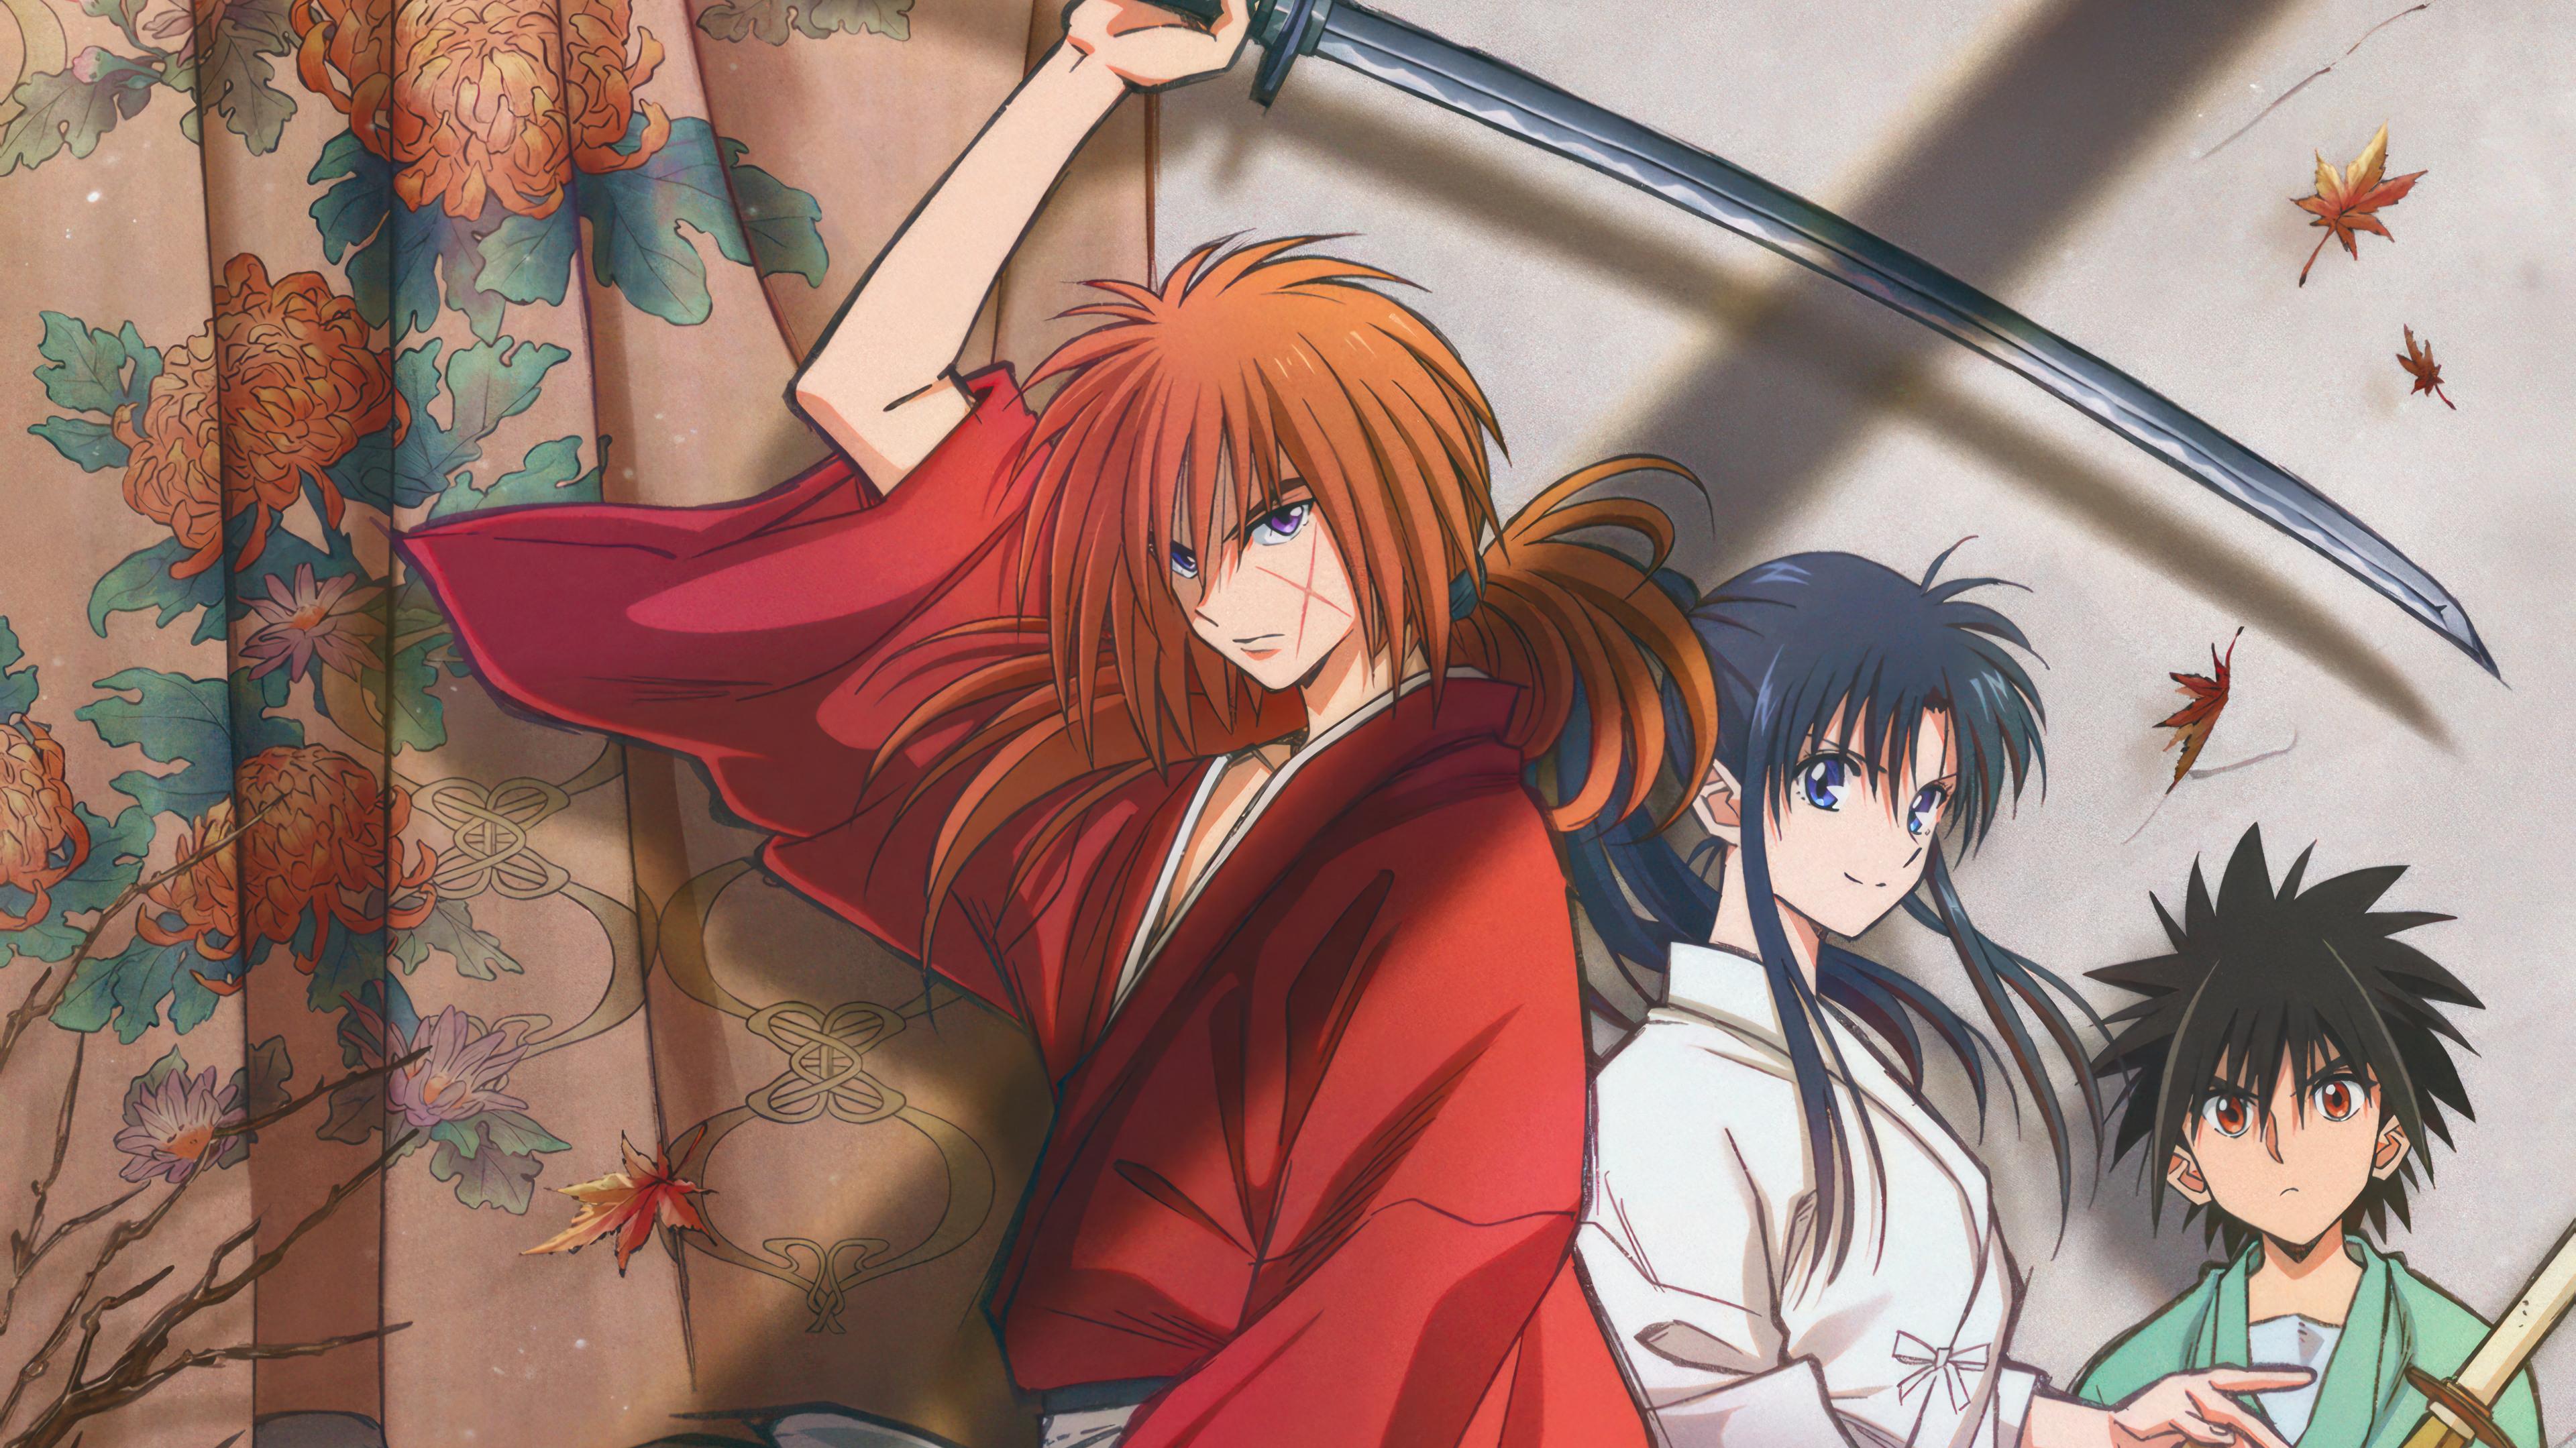  Anime Rurouni Kenshin HD Wallpapers and Backgrounds